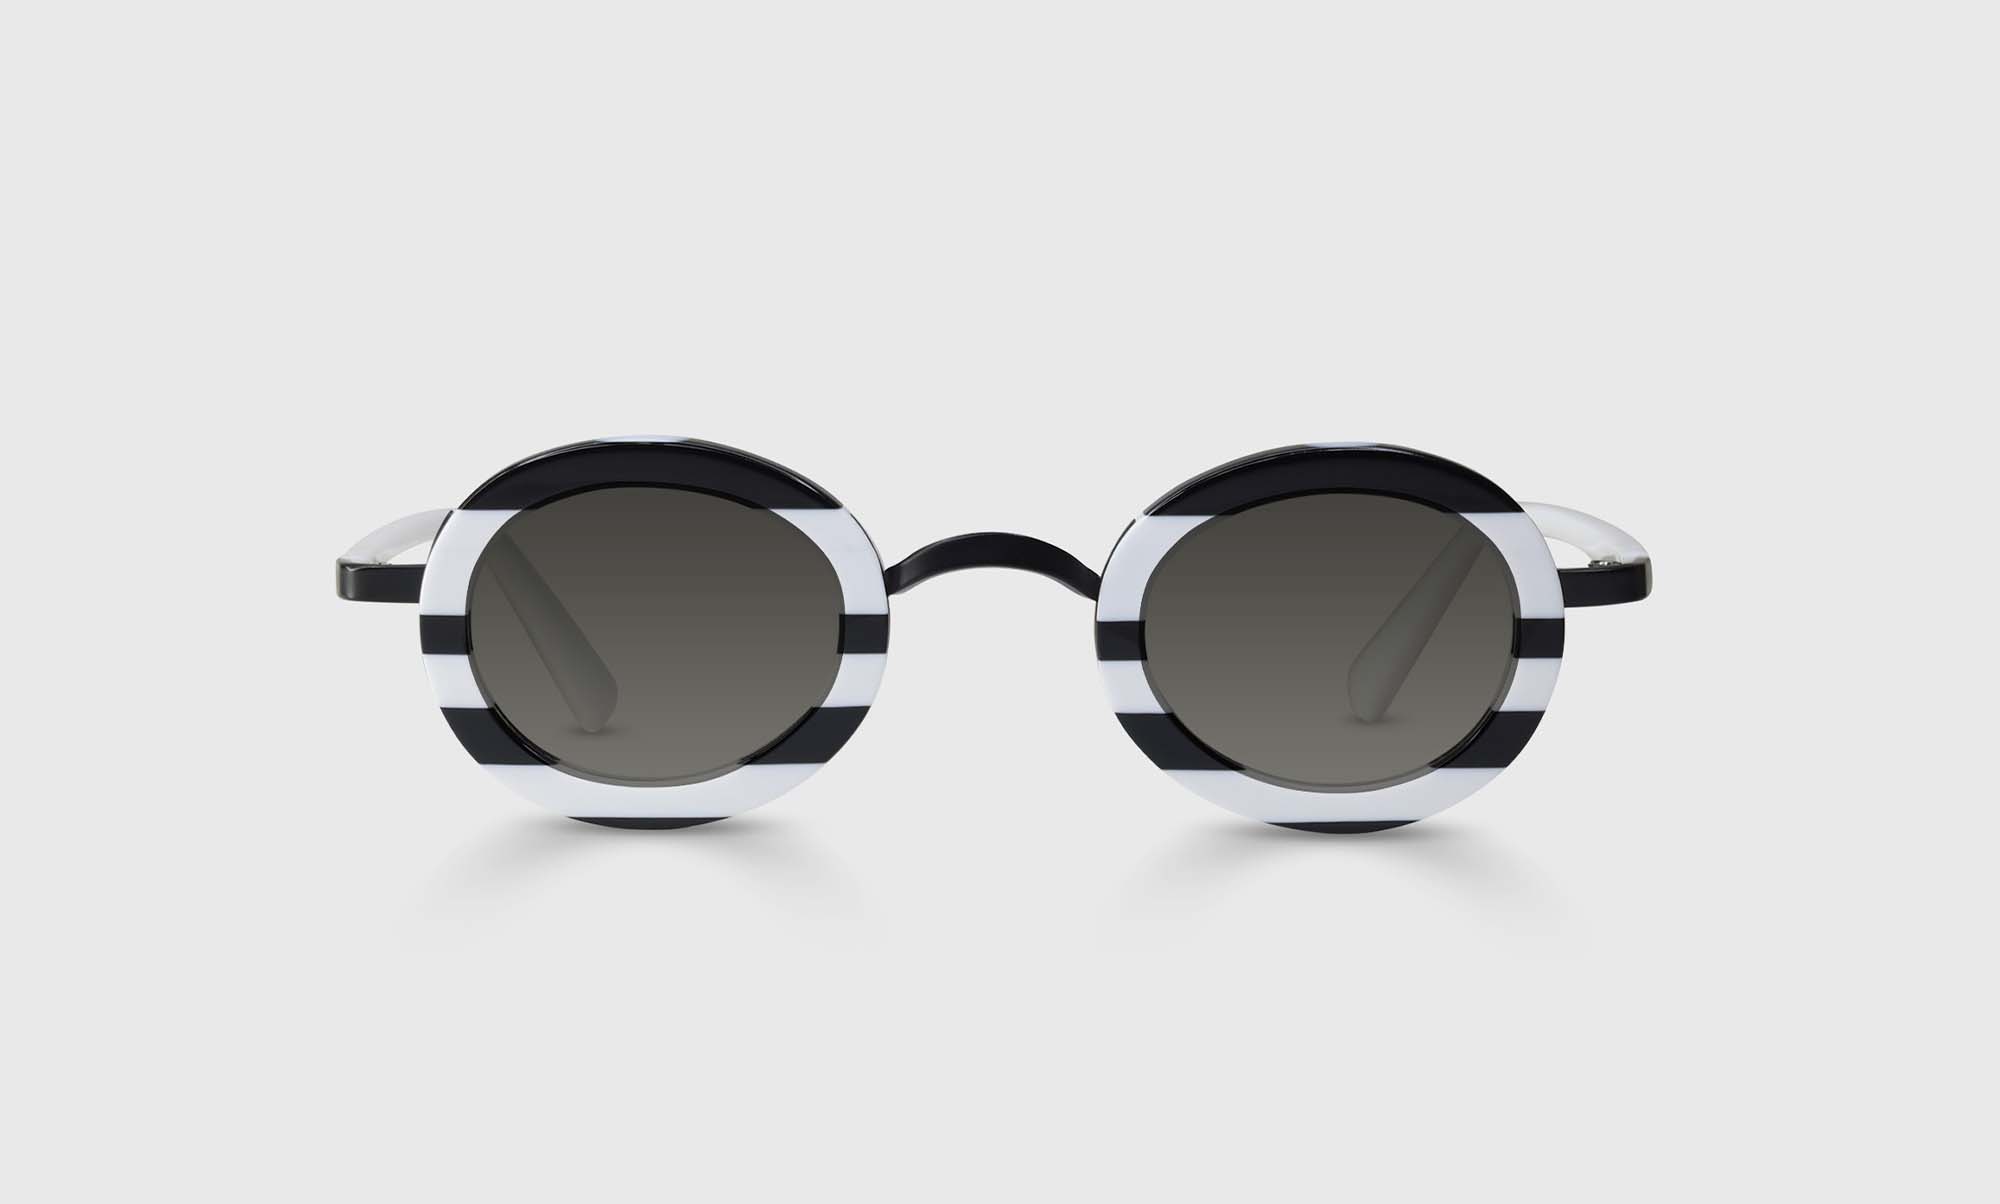 00-pg, 00-rs | eyebobs Pinhead, Round, Narrow, Bifocal Reader Sunglasses, Polarized Grey Sunglasses